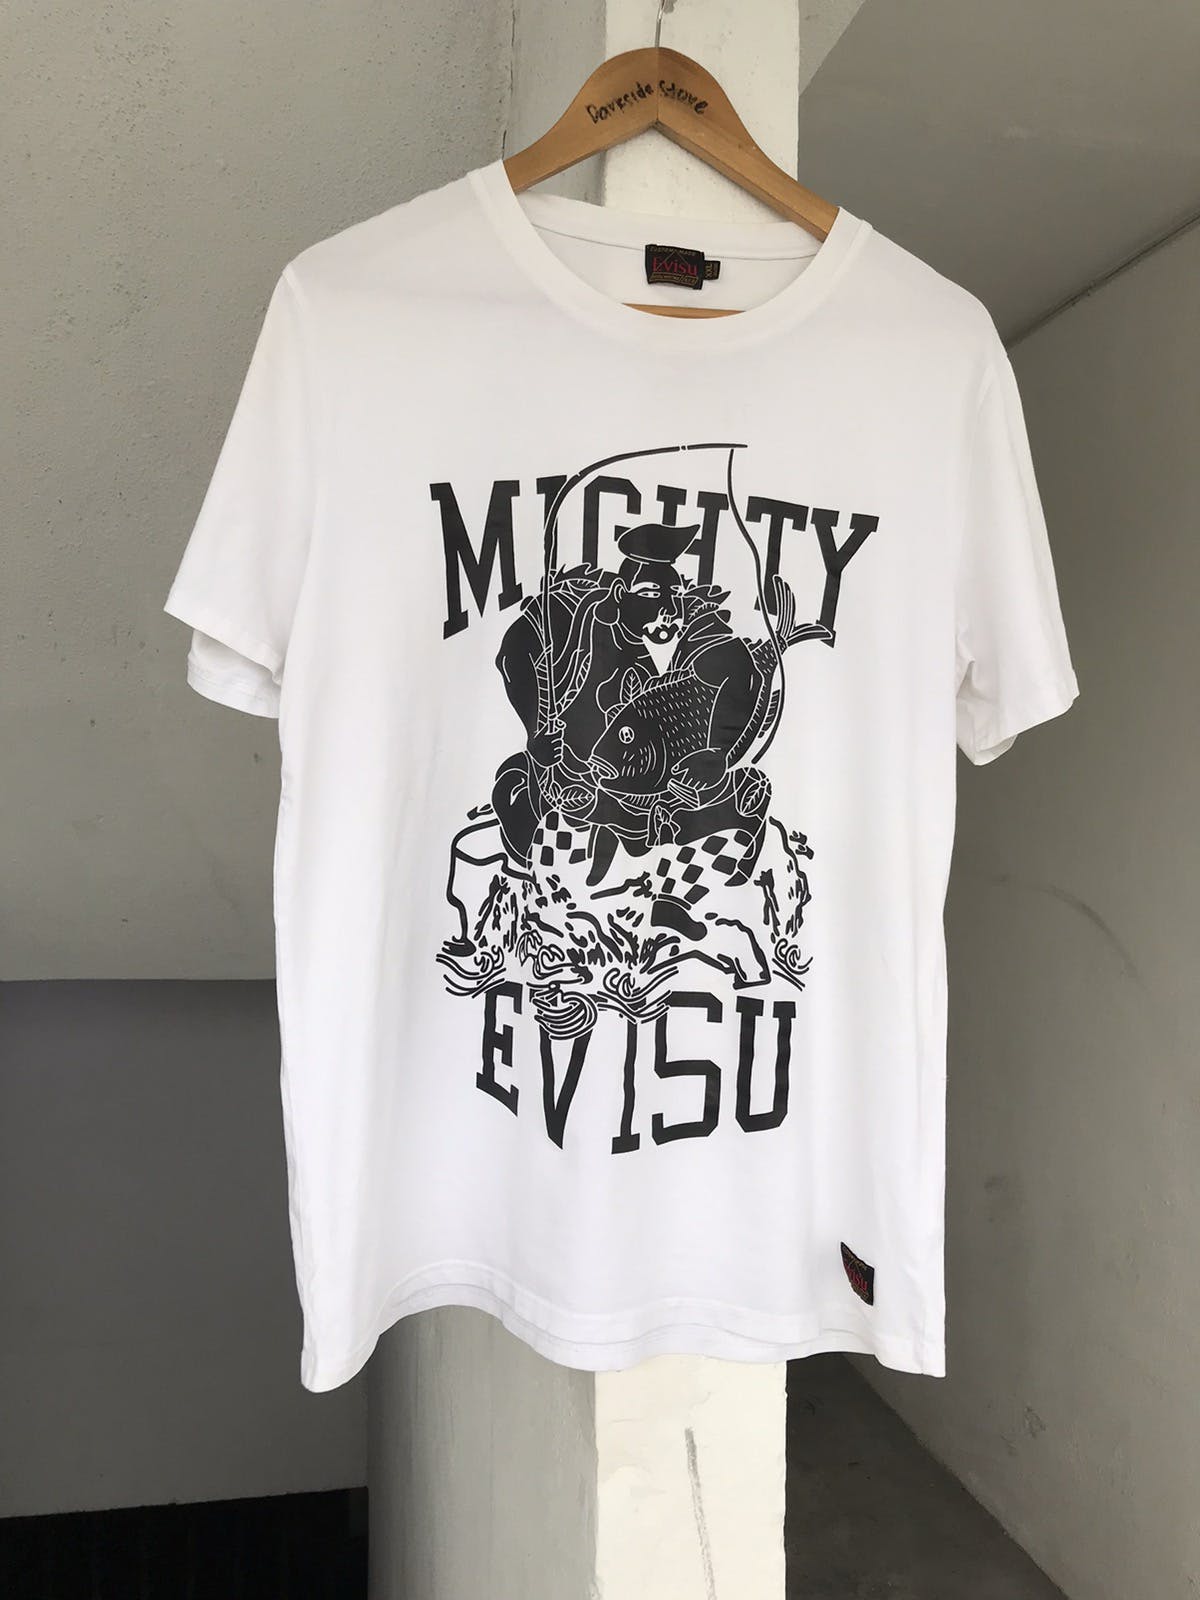 Mighty Evisu White tee - 2